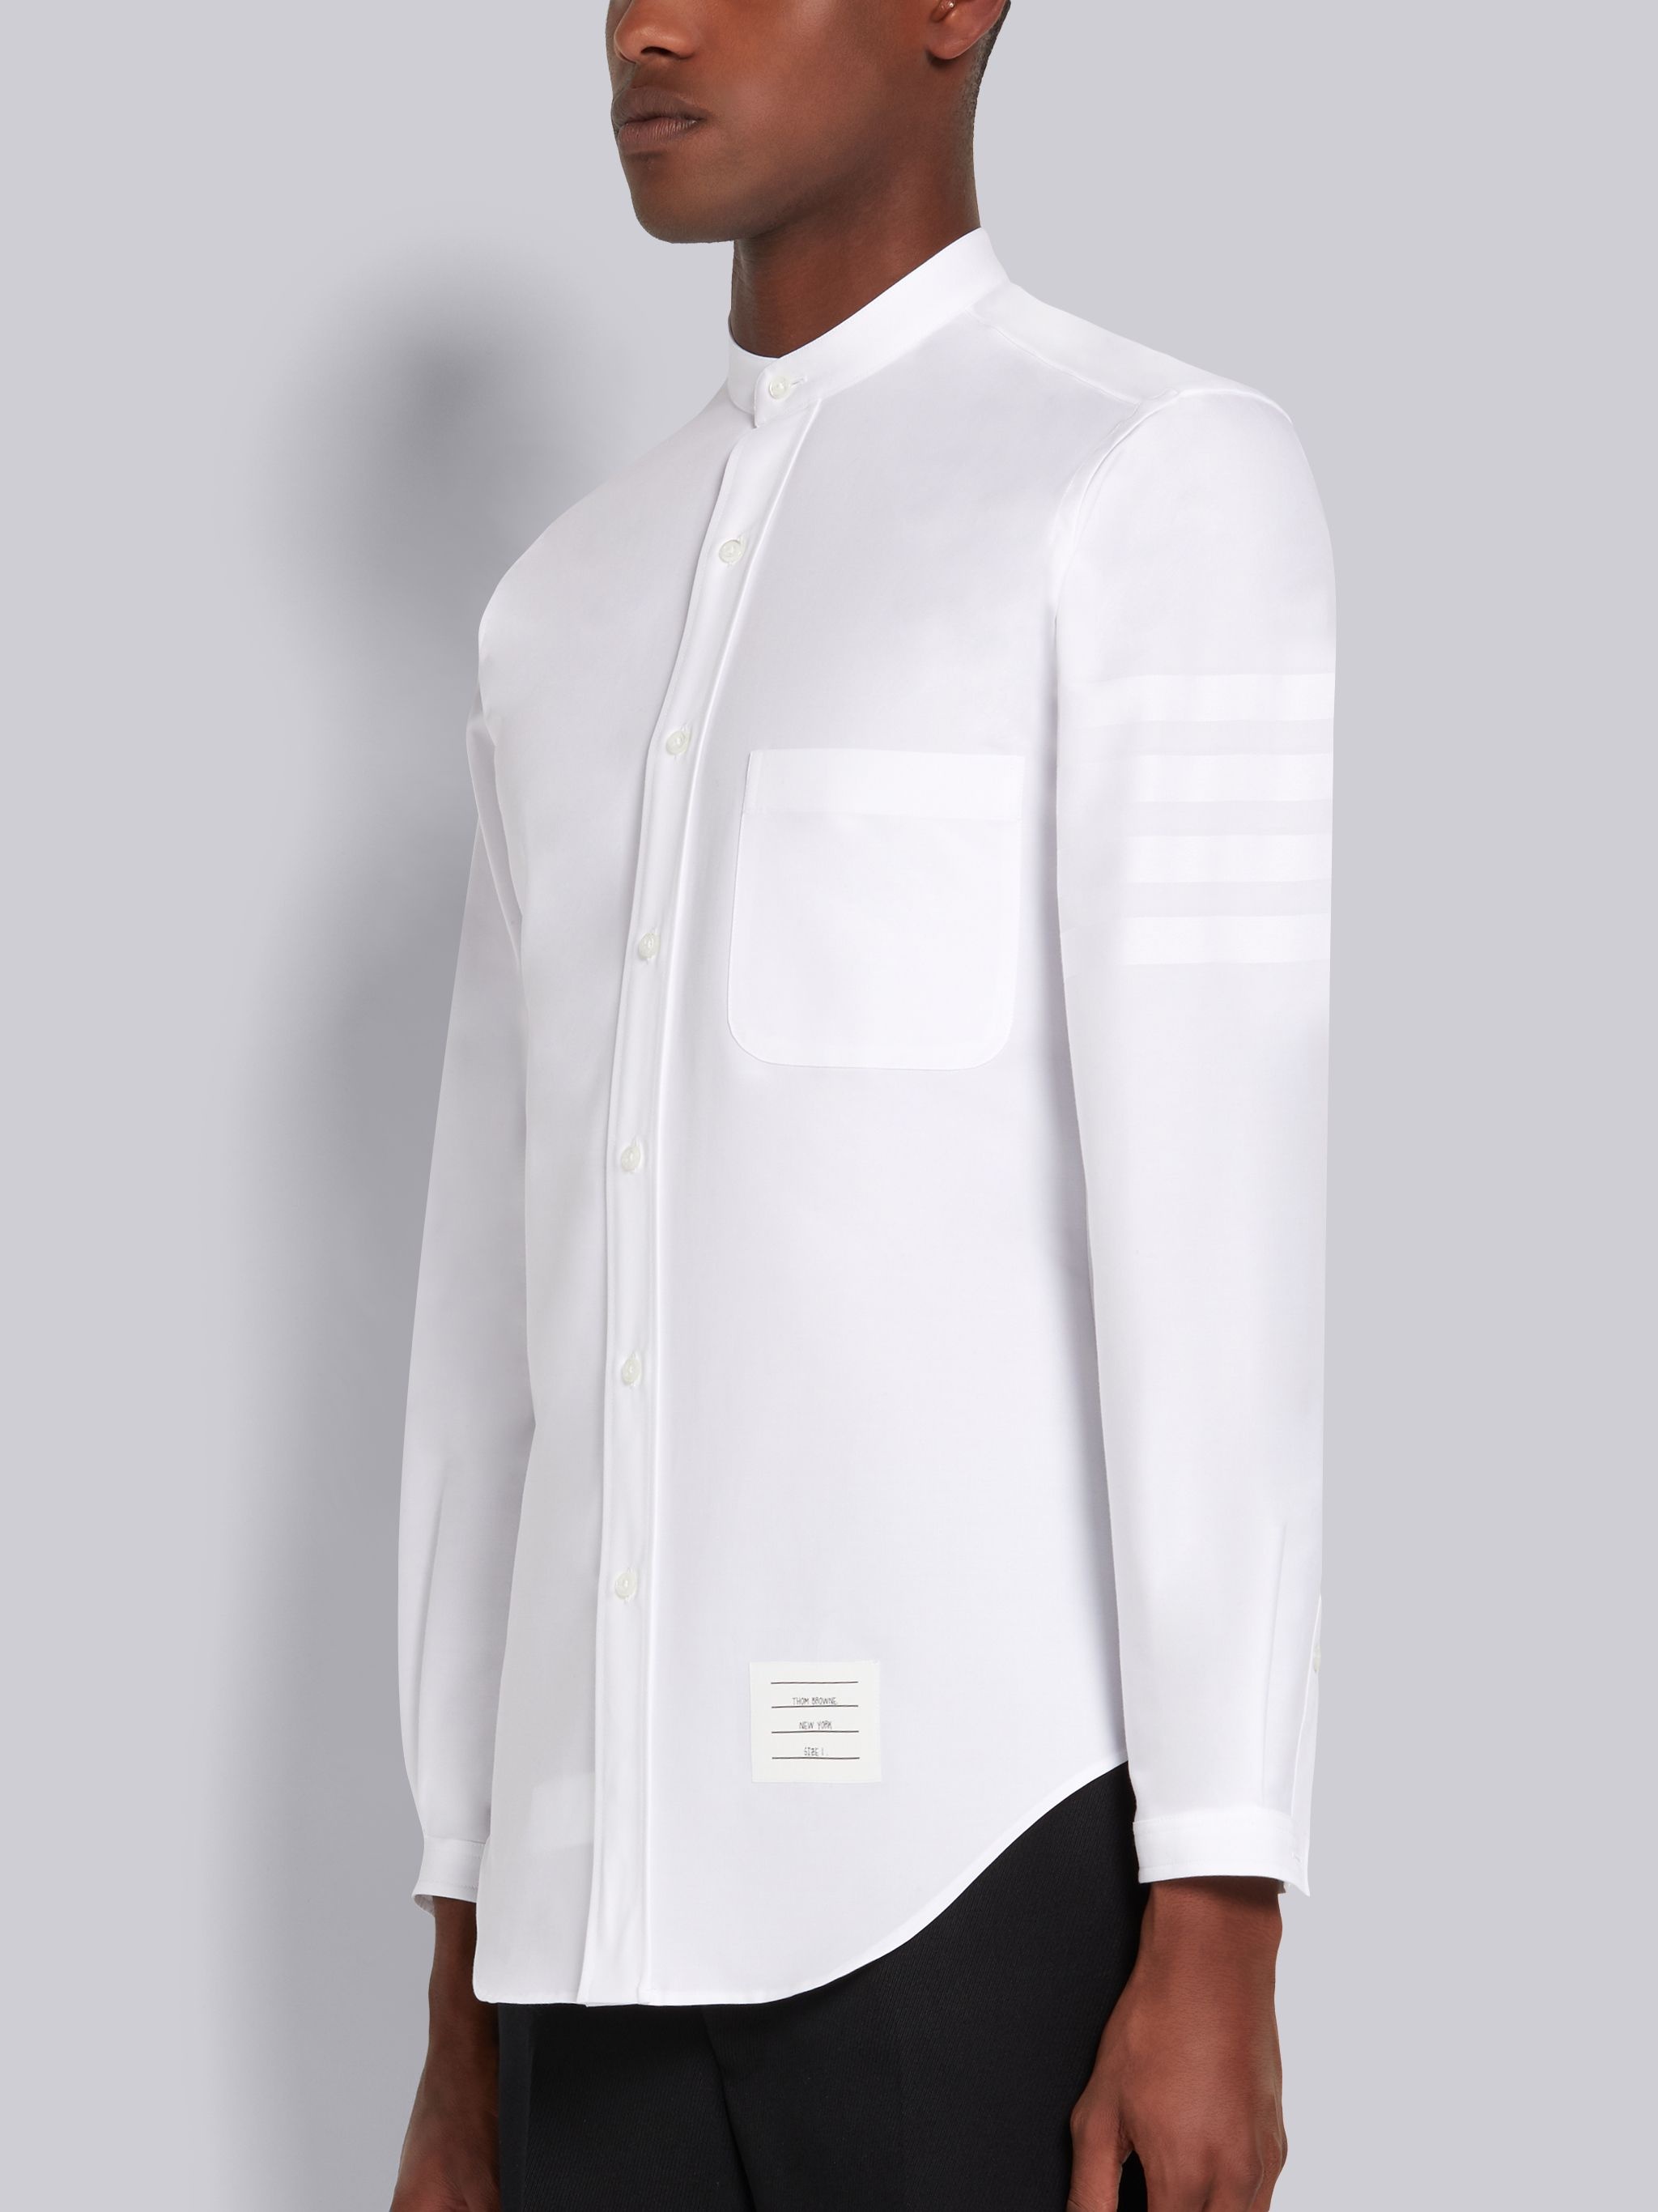 White Satin Weave Oxford Engineered 4-Bar Stripe Band Collar Classic Button Down Shirt - 2